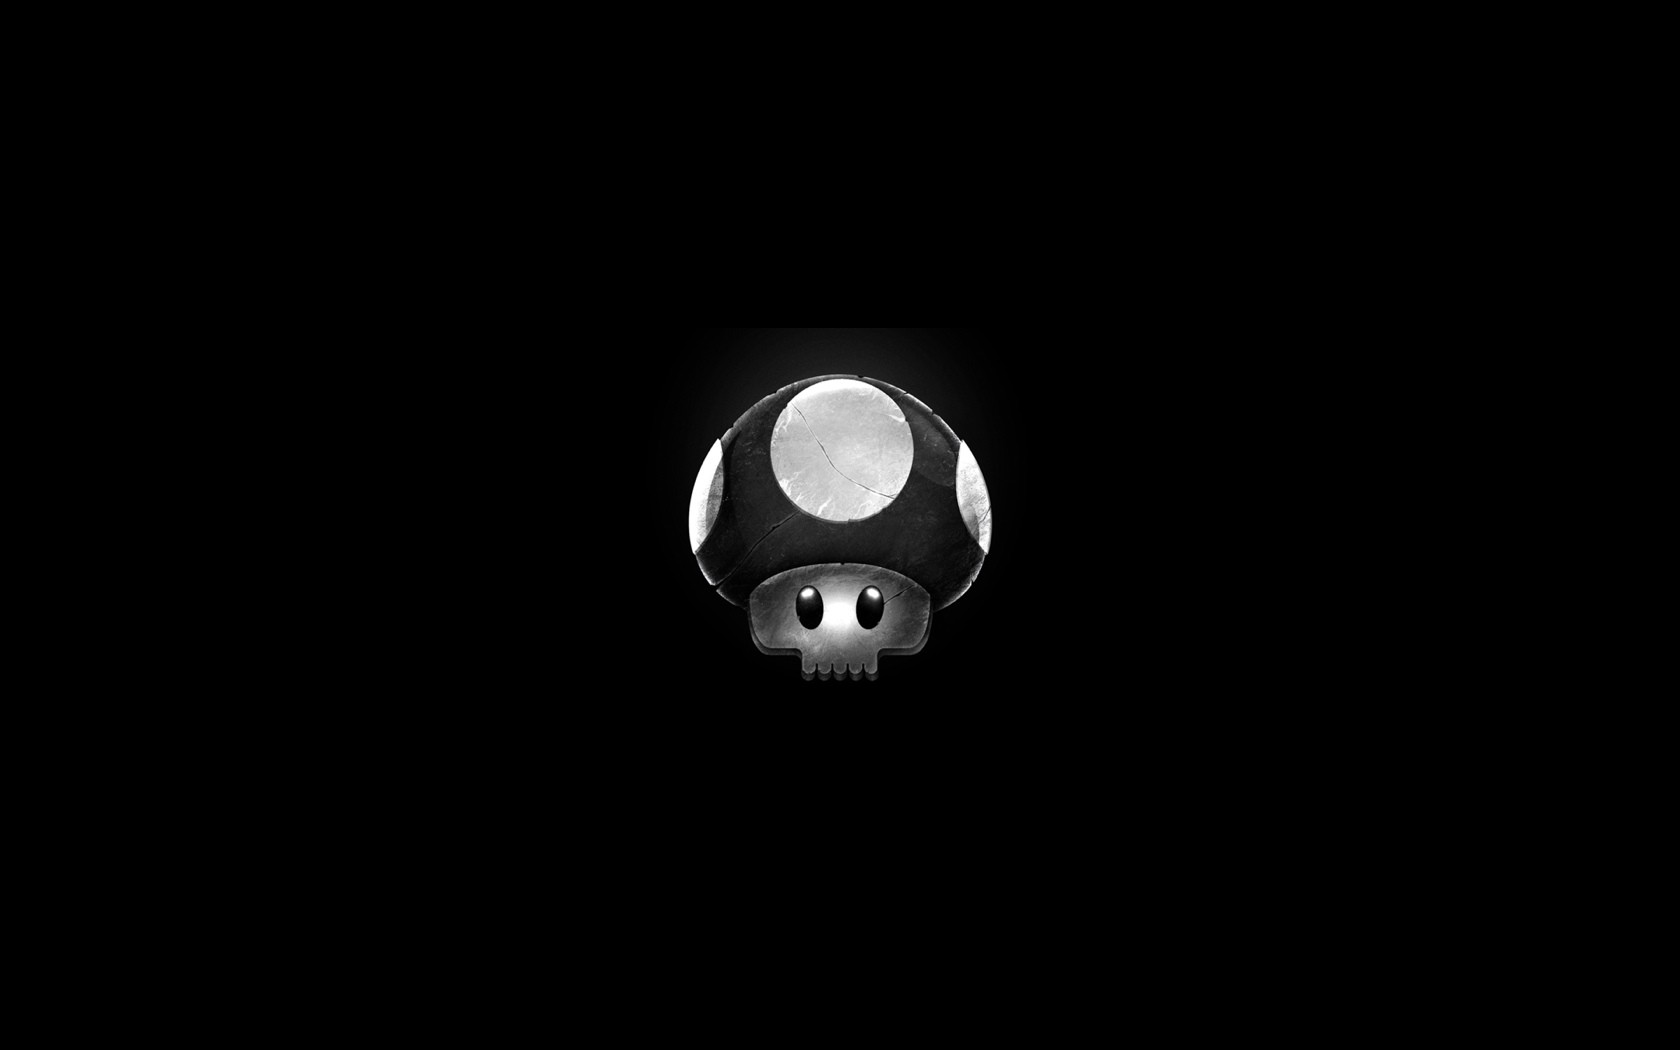 General 1680x1050 artwork fire Mario Bros. mushroom gray skull black video games video game art monochrome simple background black background